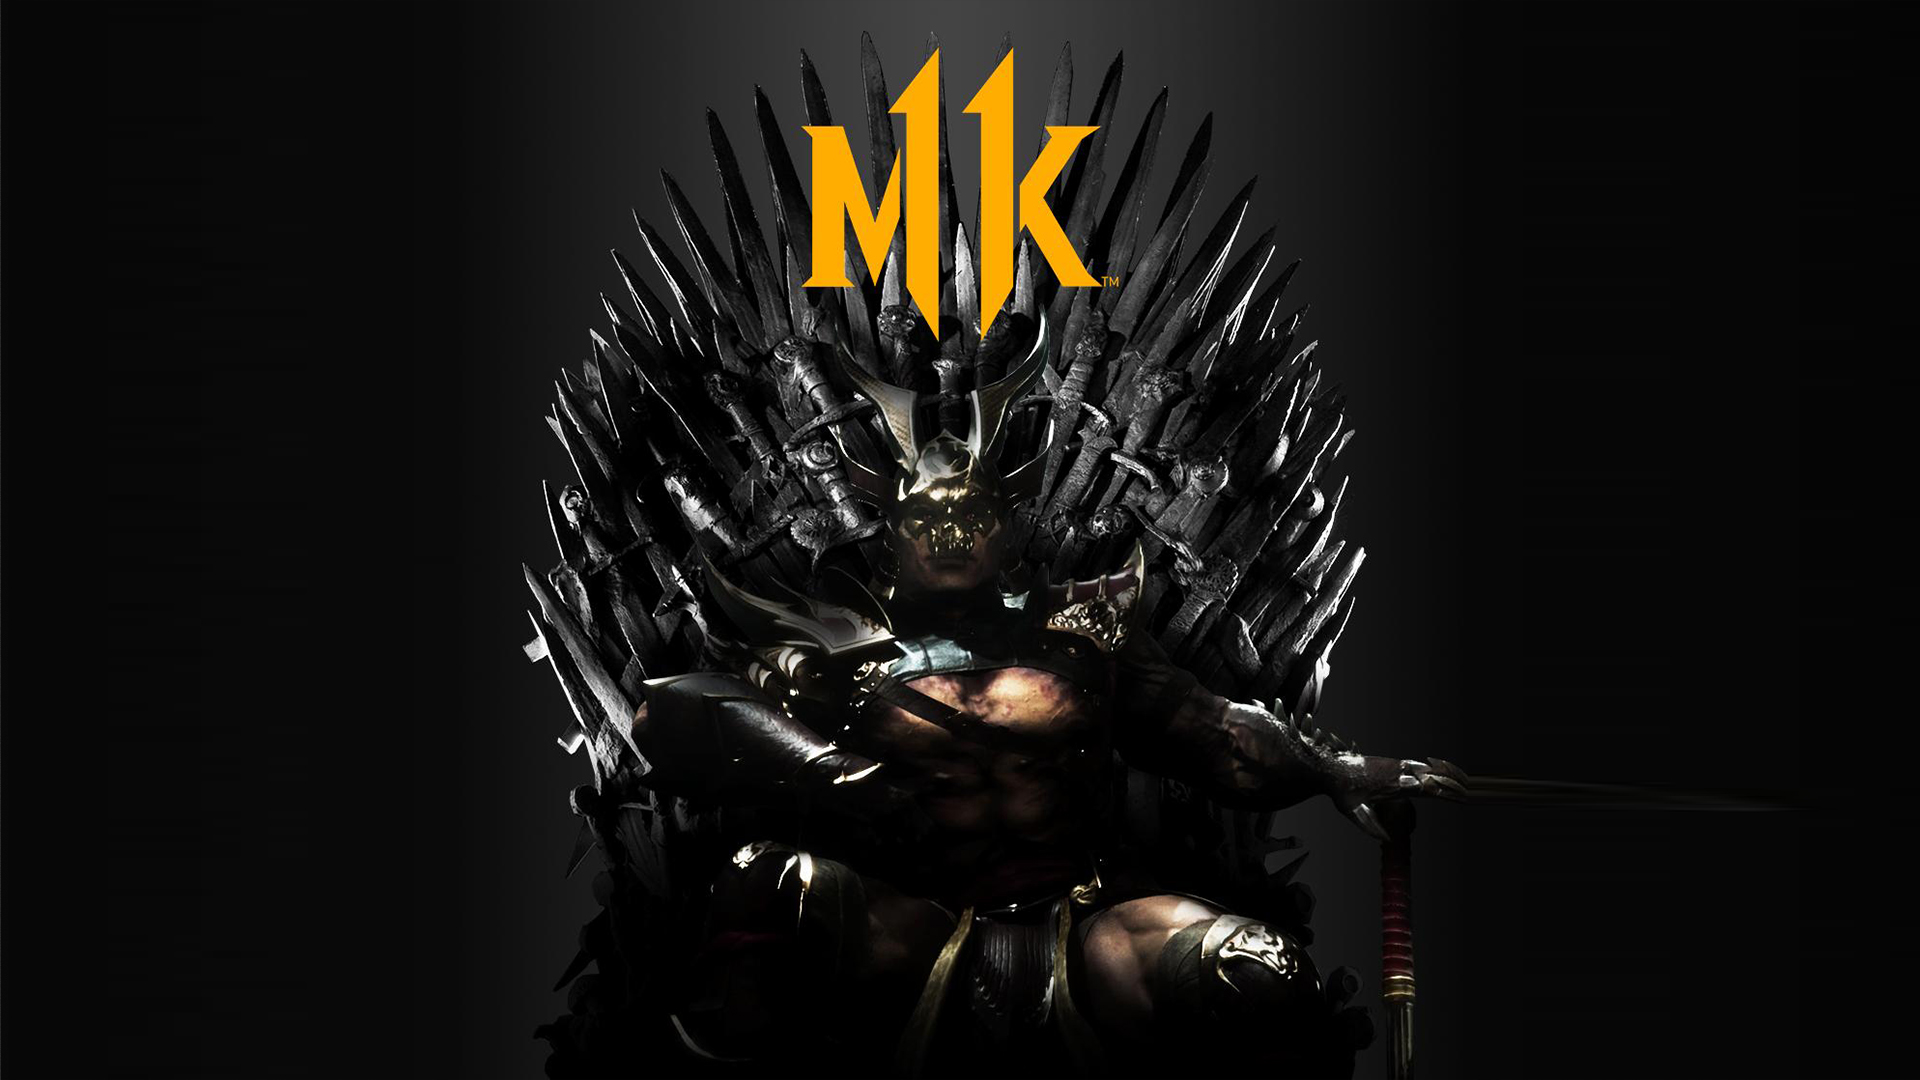 Mortal Kombat background - Shao Khan Game of Thrones